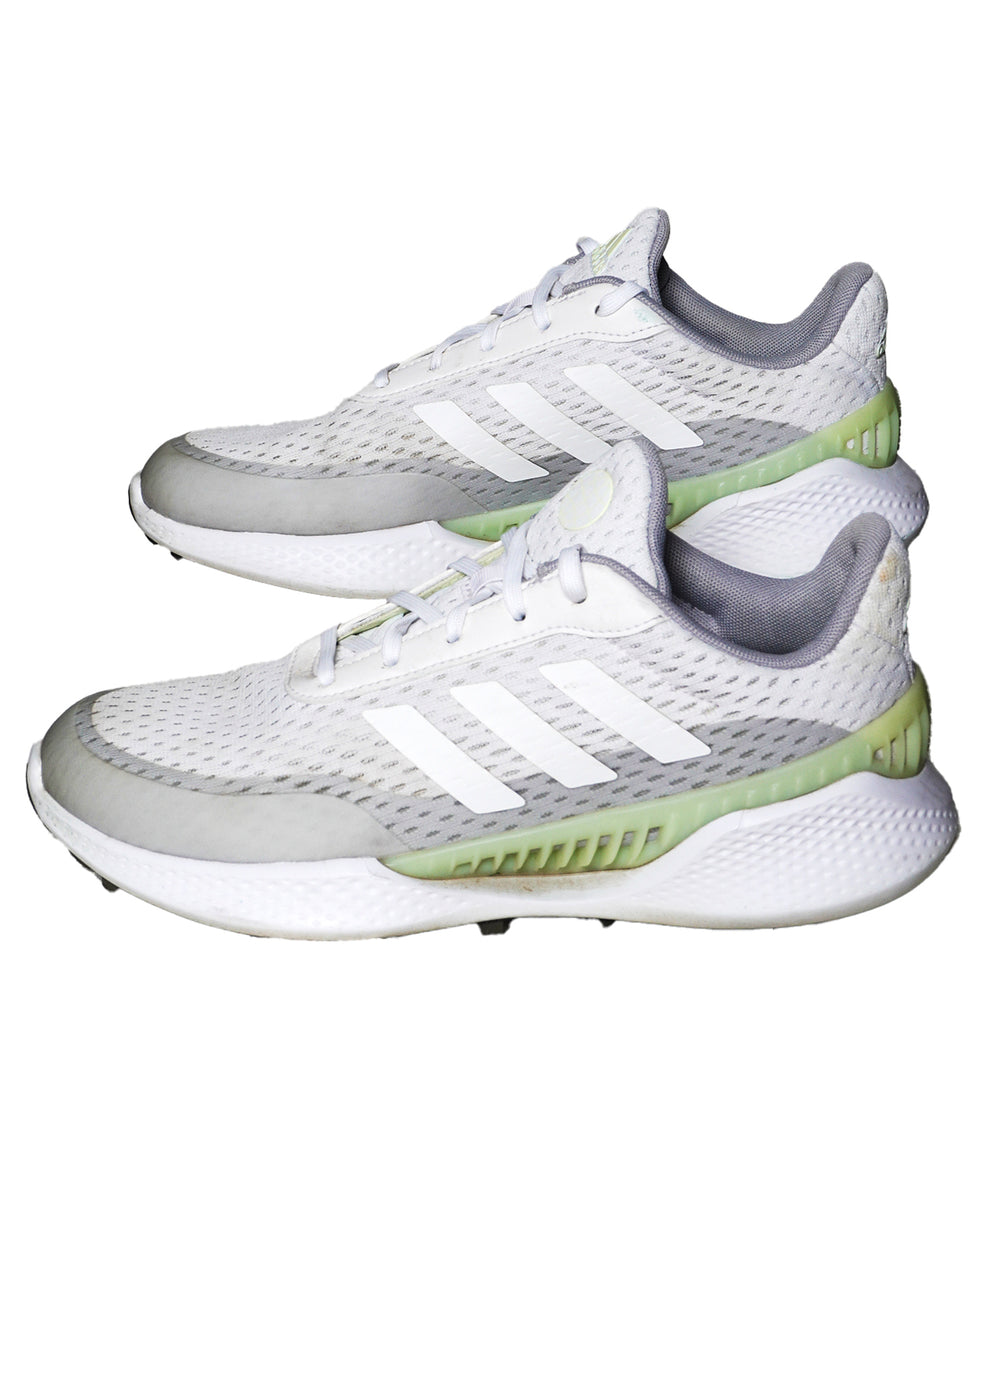 Adidas Summervent Spikeless Golf Shoes - White - Size 8 - Skorzie